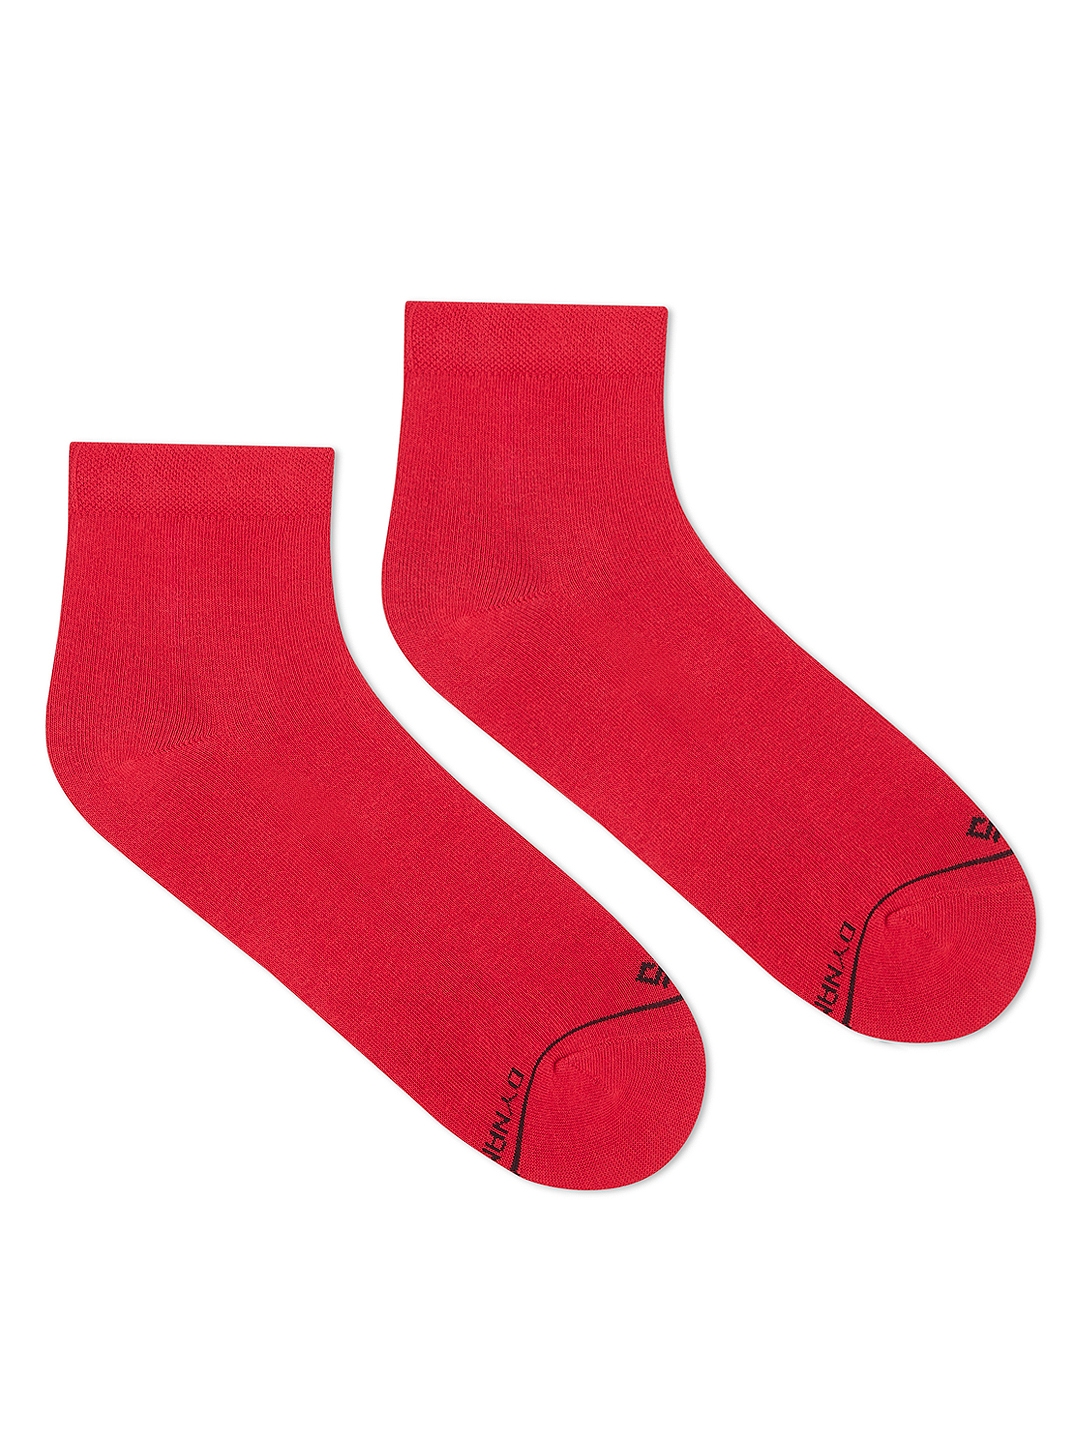 Dynamocks Women Red Solid Ankle Length Socks